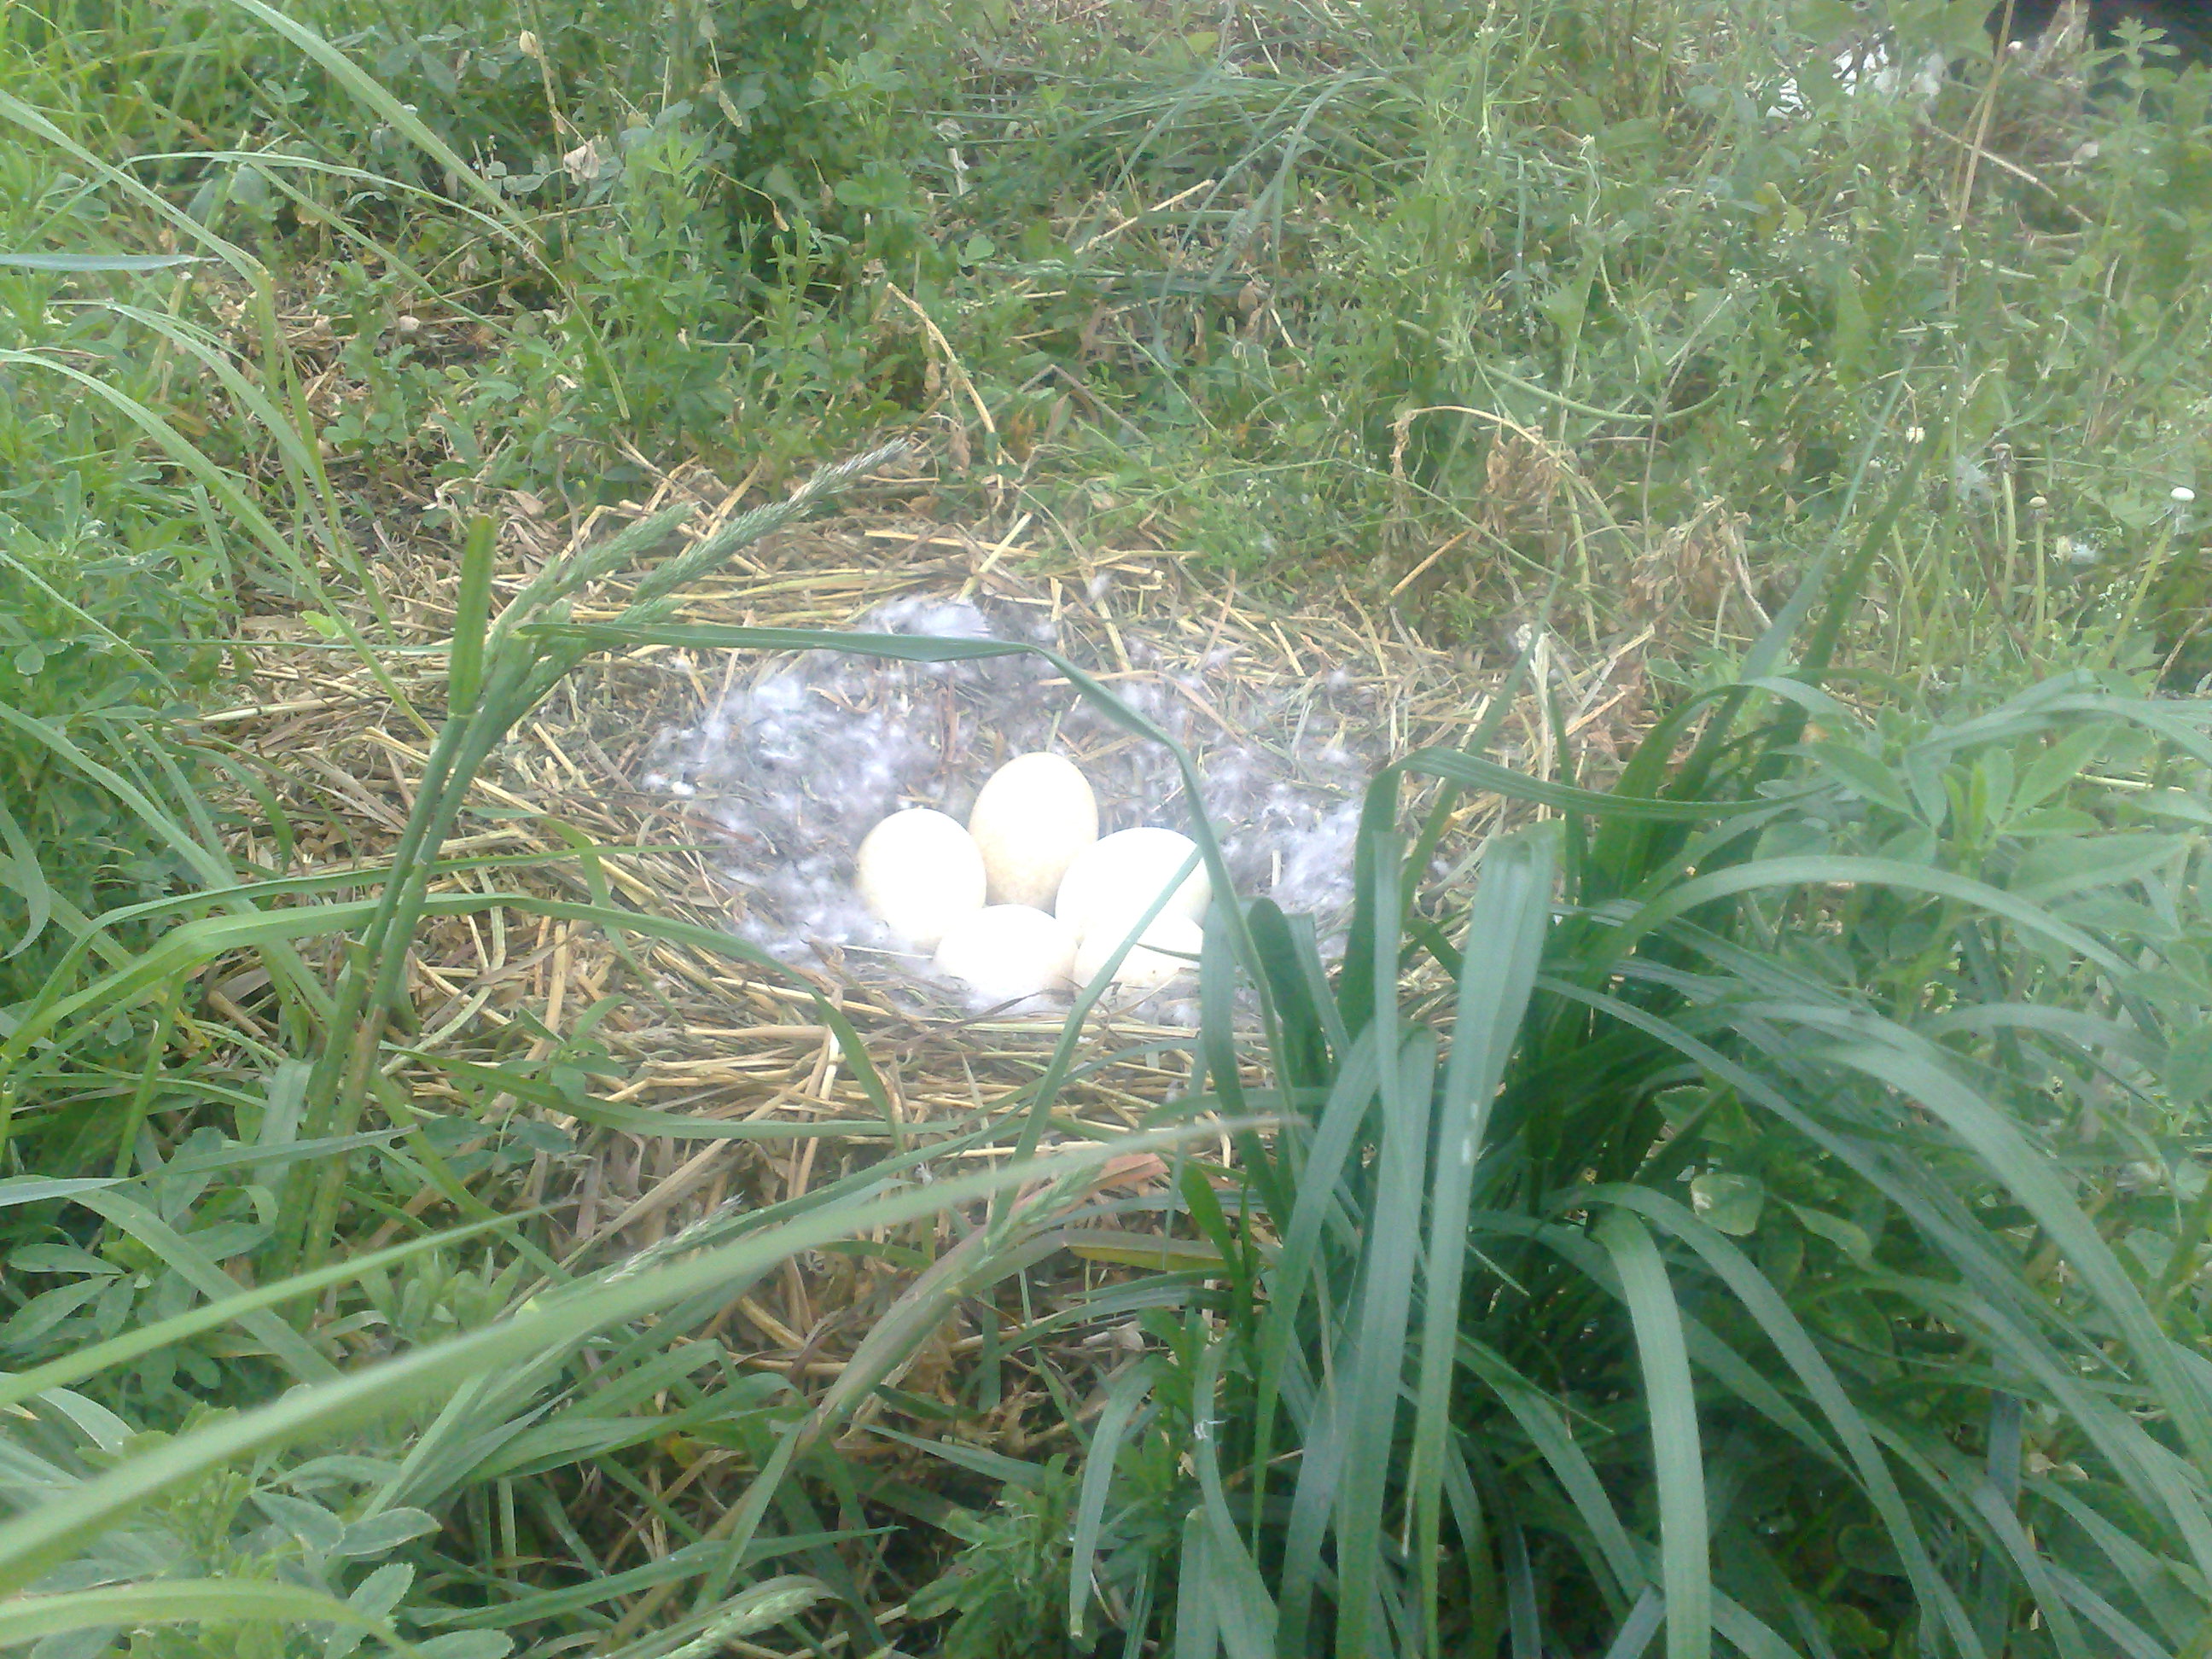 A Nest of goose eggs